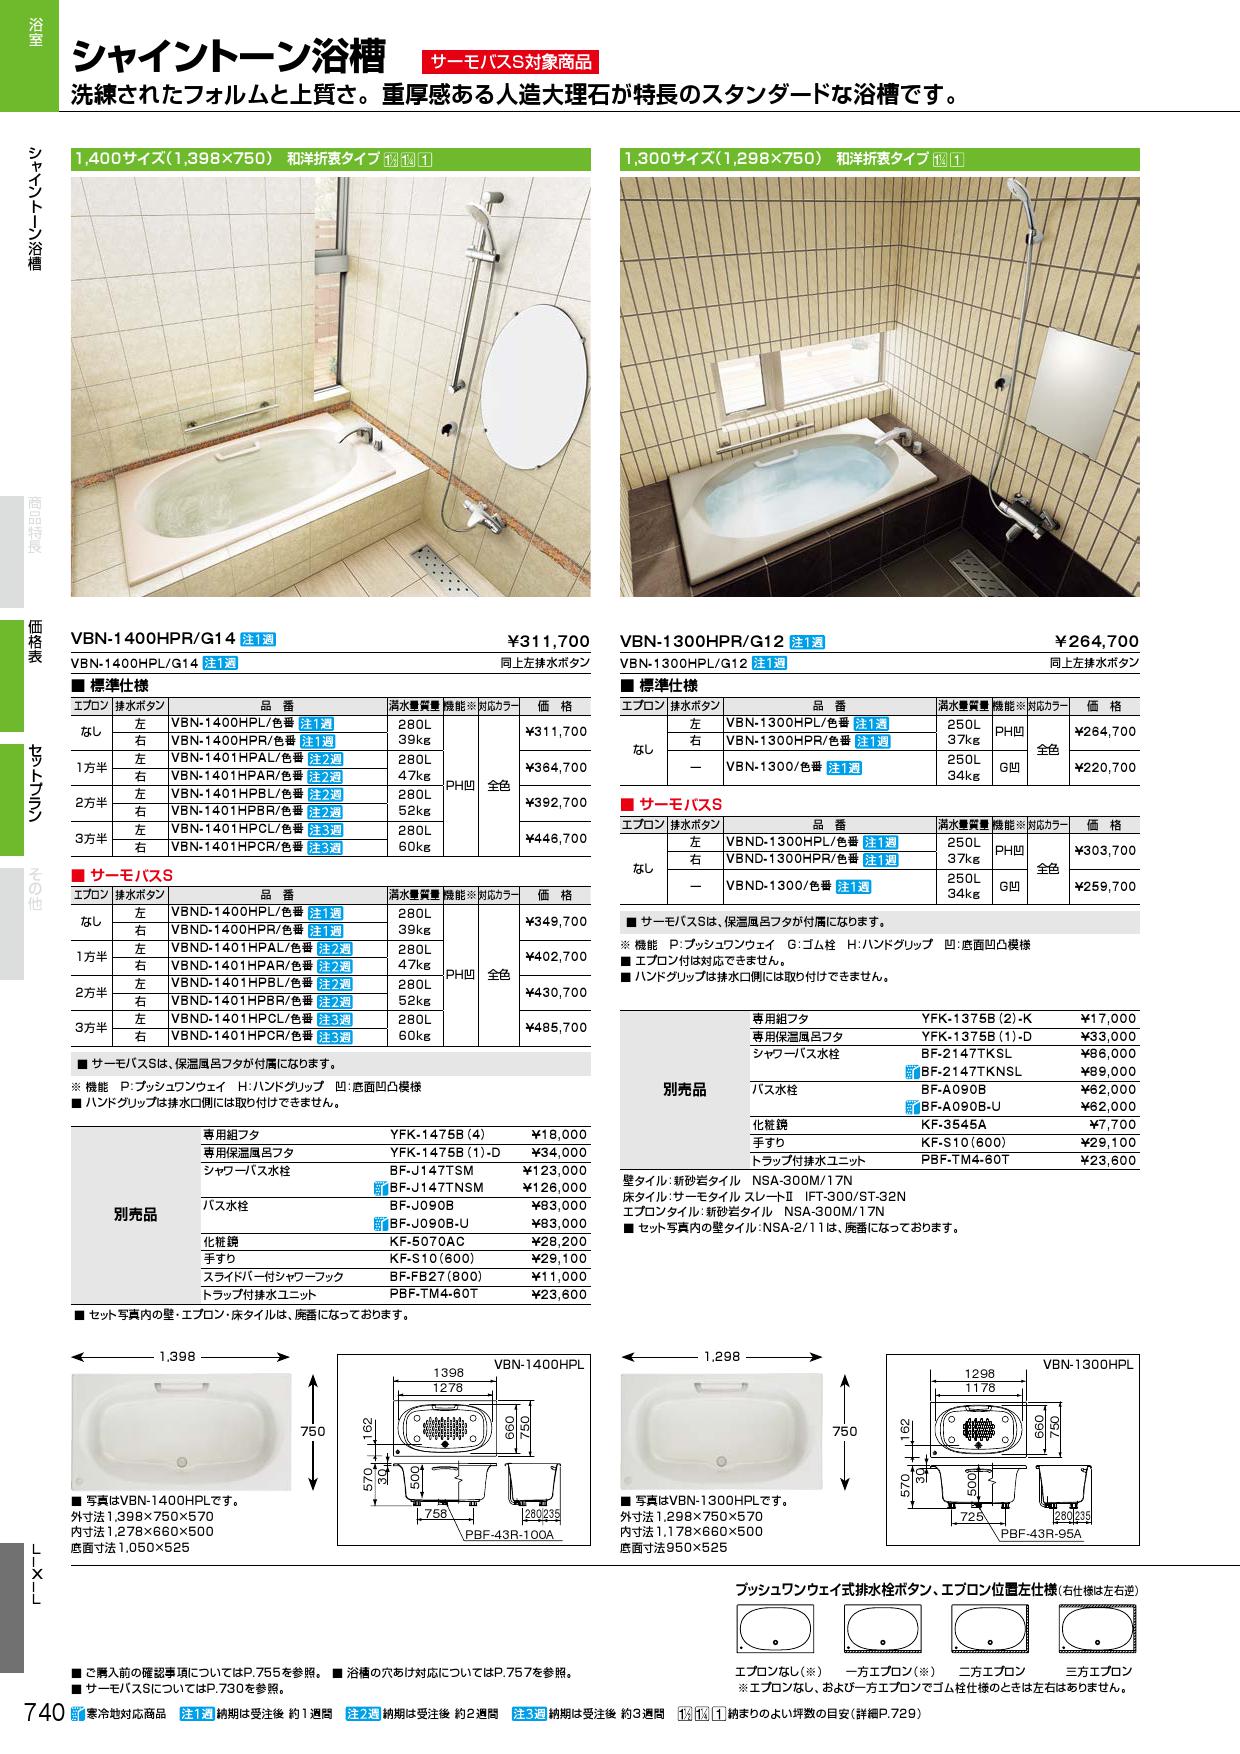 VBN-1401HPBL】 リクシル シャイントーン浴槽(二方半エプロン) яз∠ vbn-1401hpbl アールホームマート  !店 通販 